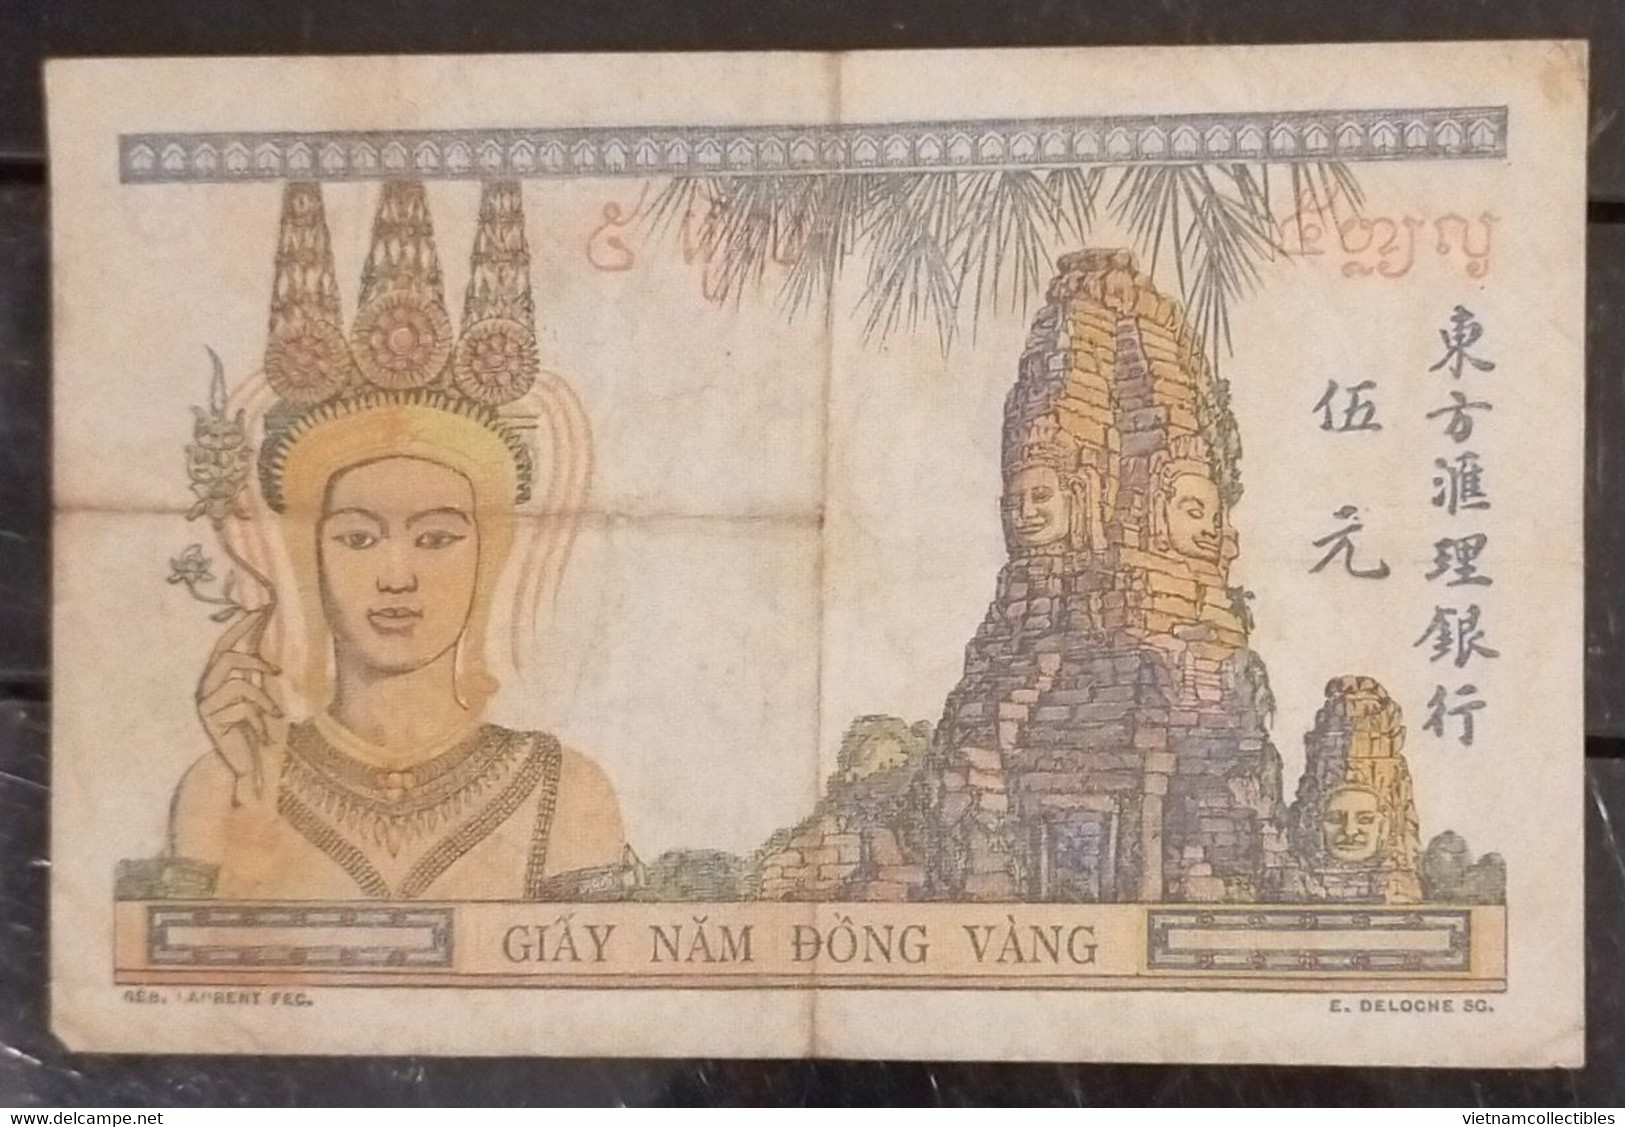 Indochine Indochina Vietnam Viet Nam Laos Cambodia 5 Piastres VF Banknote 1946 - Pick # 55c / 02 Photos - Indochina